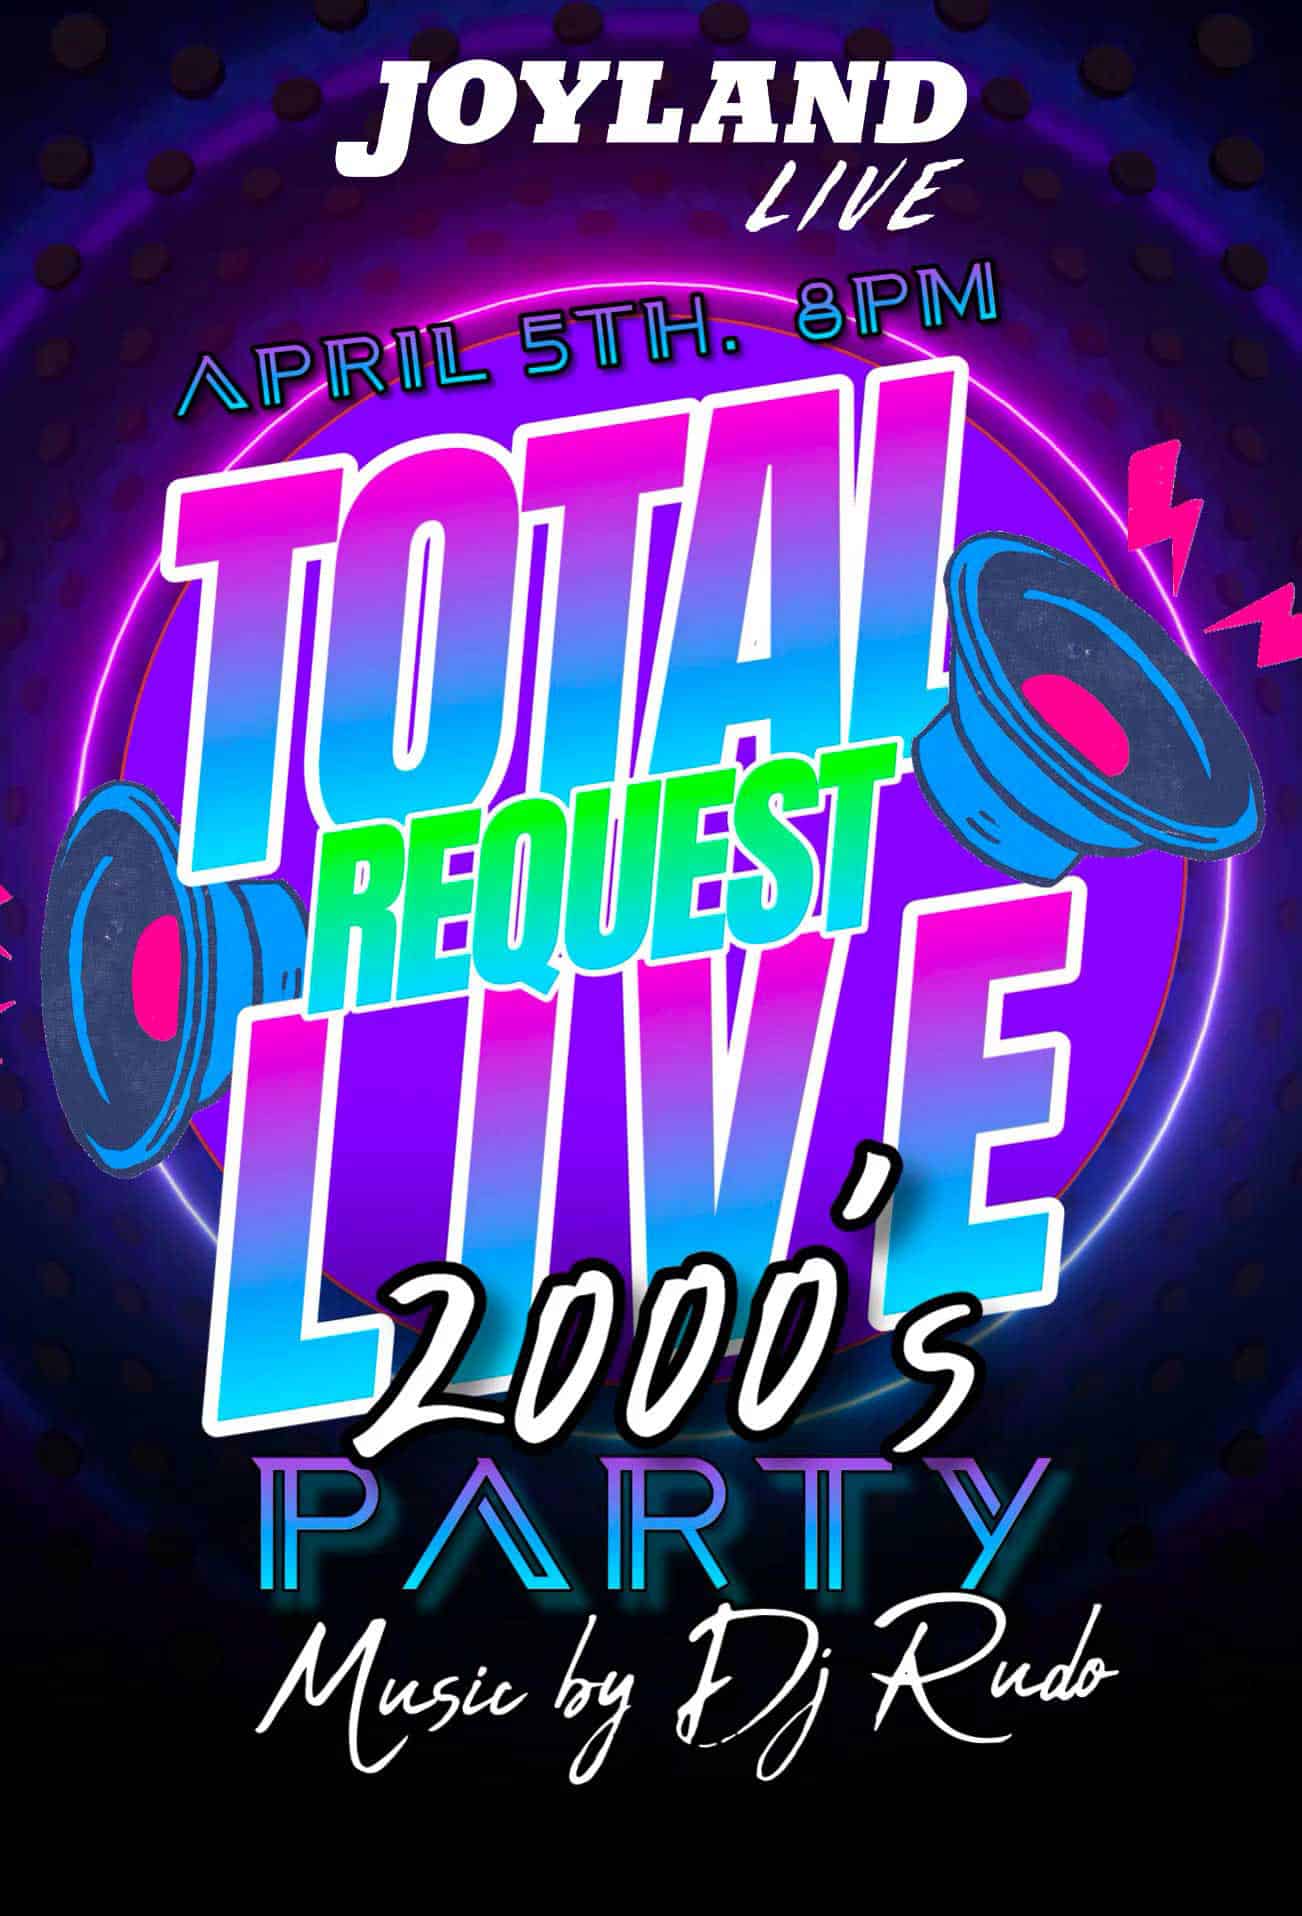 joyland-total-request-live-2000s-party